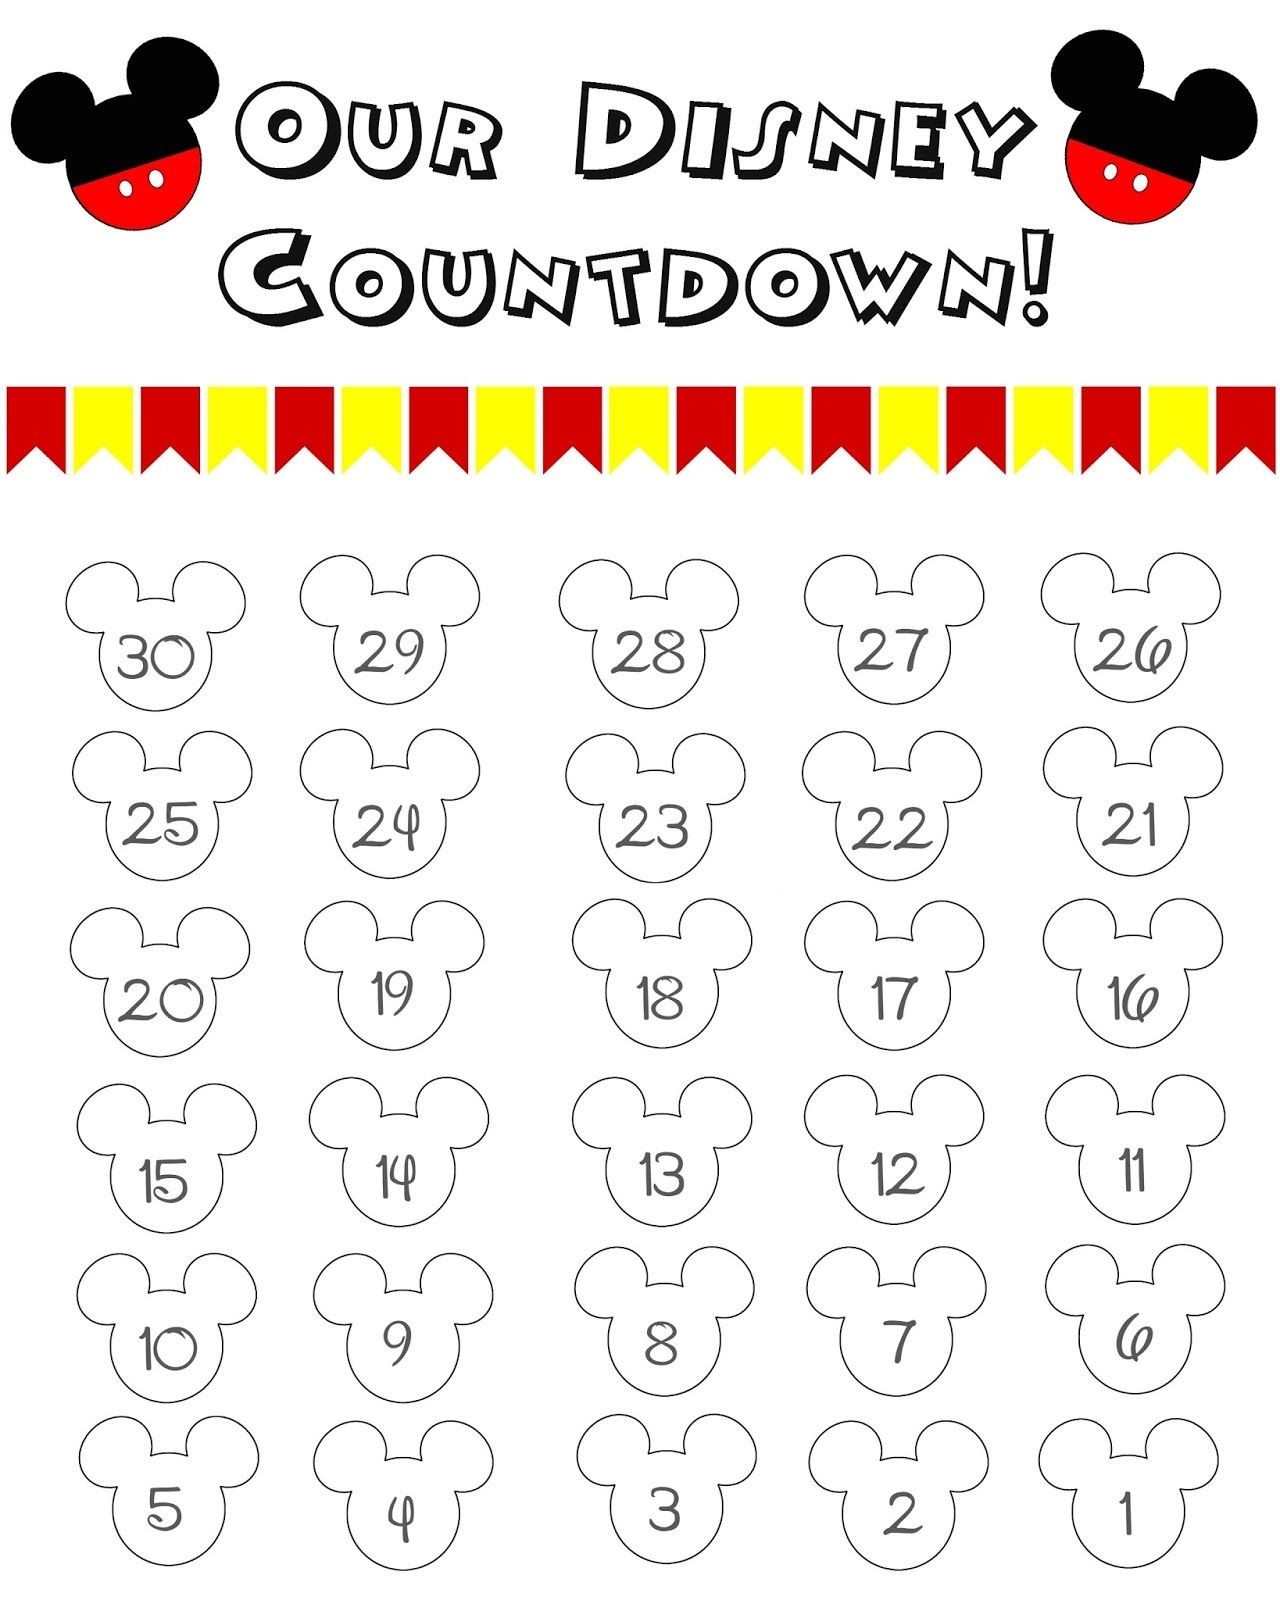 Disney World Countdown Calendar - Free Printable!! | Disney-Disney Countdown Calendar Printable Template